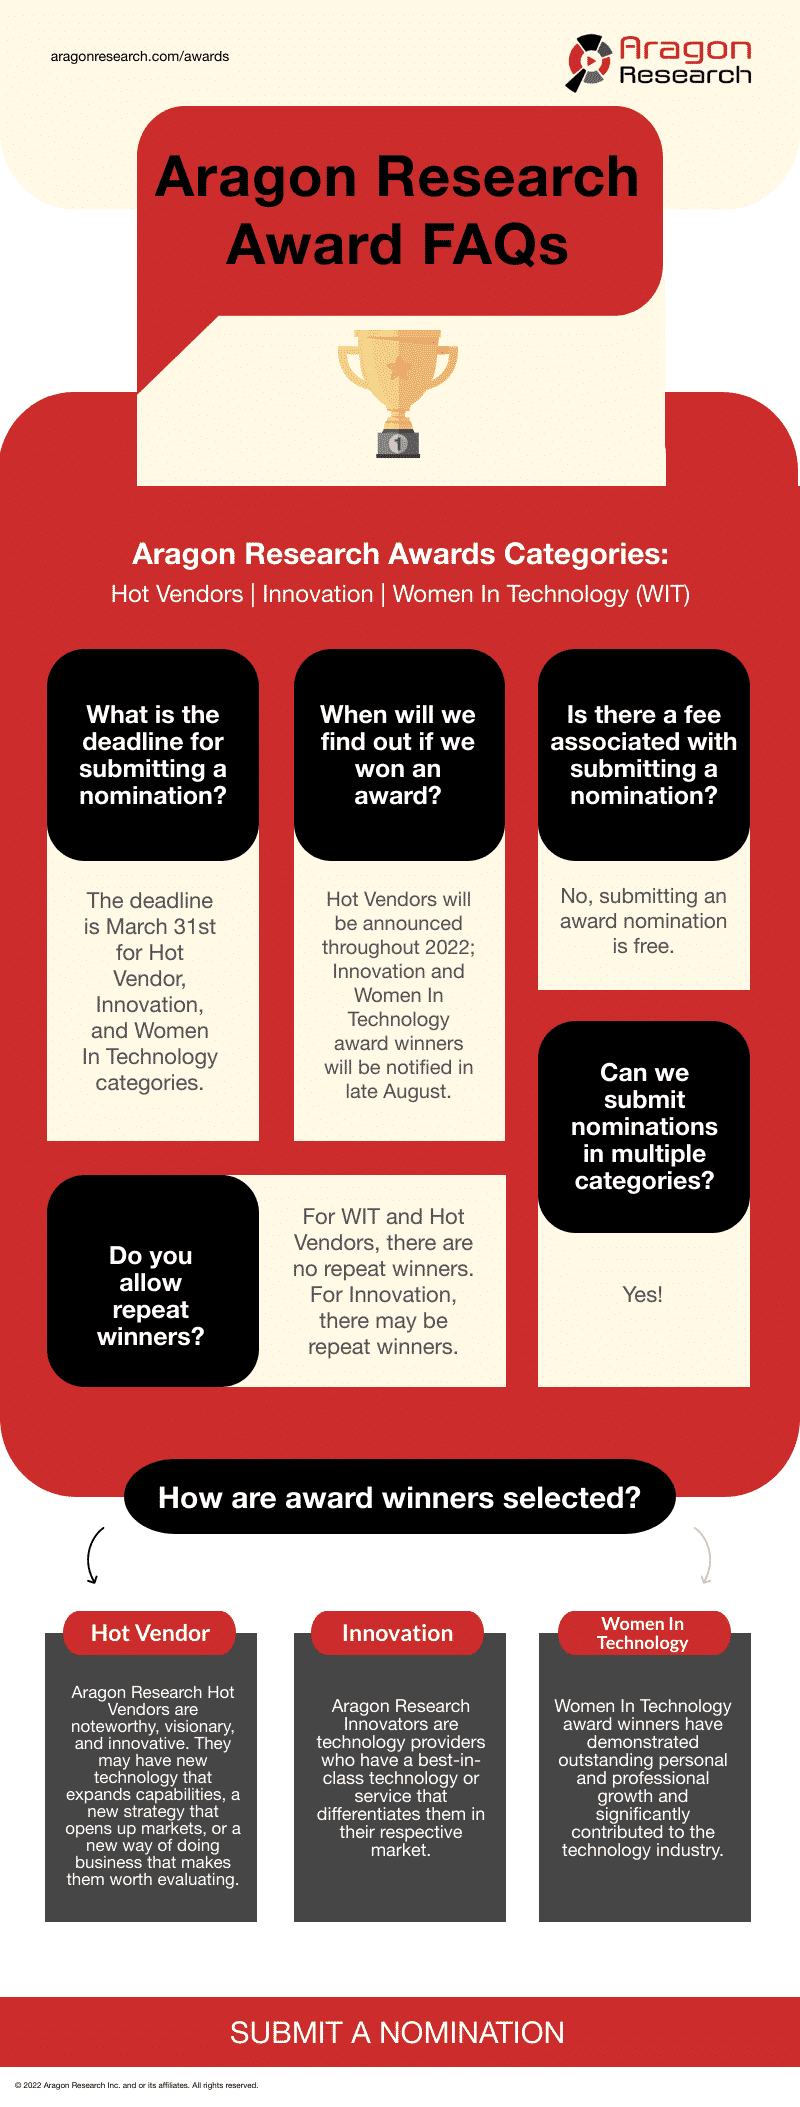 Awards FAQ - [Infographic] Aragon Research Award FAQs!